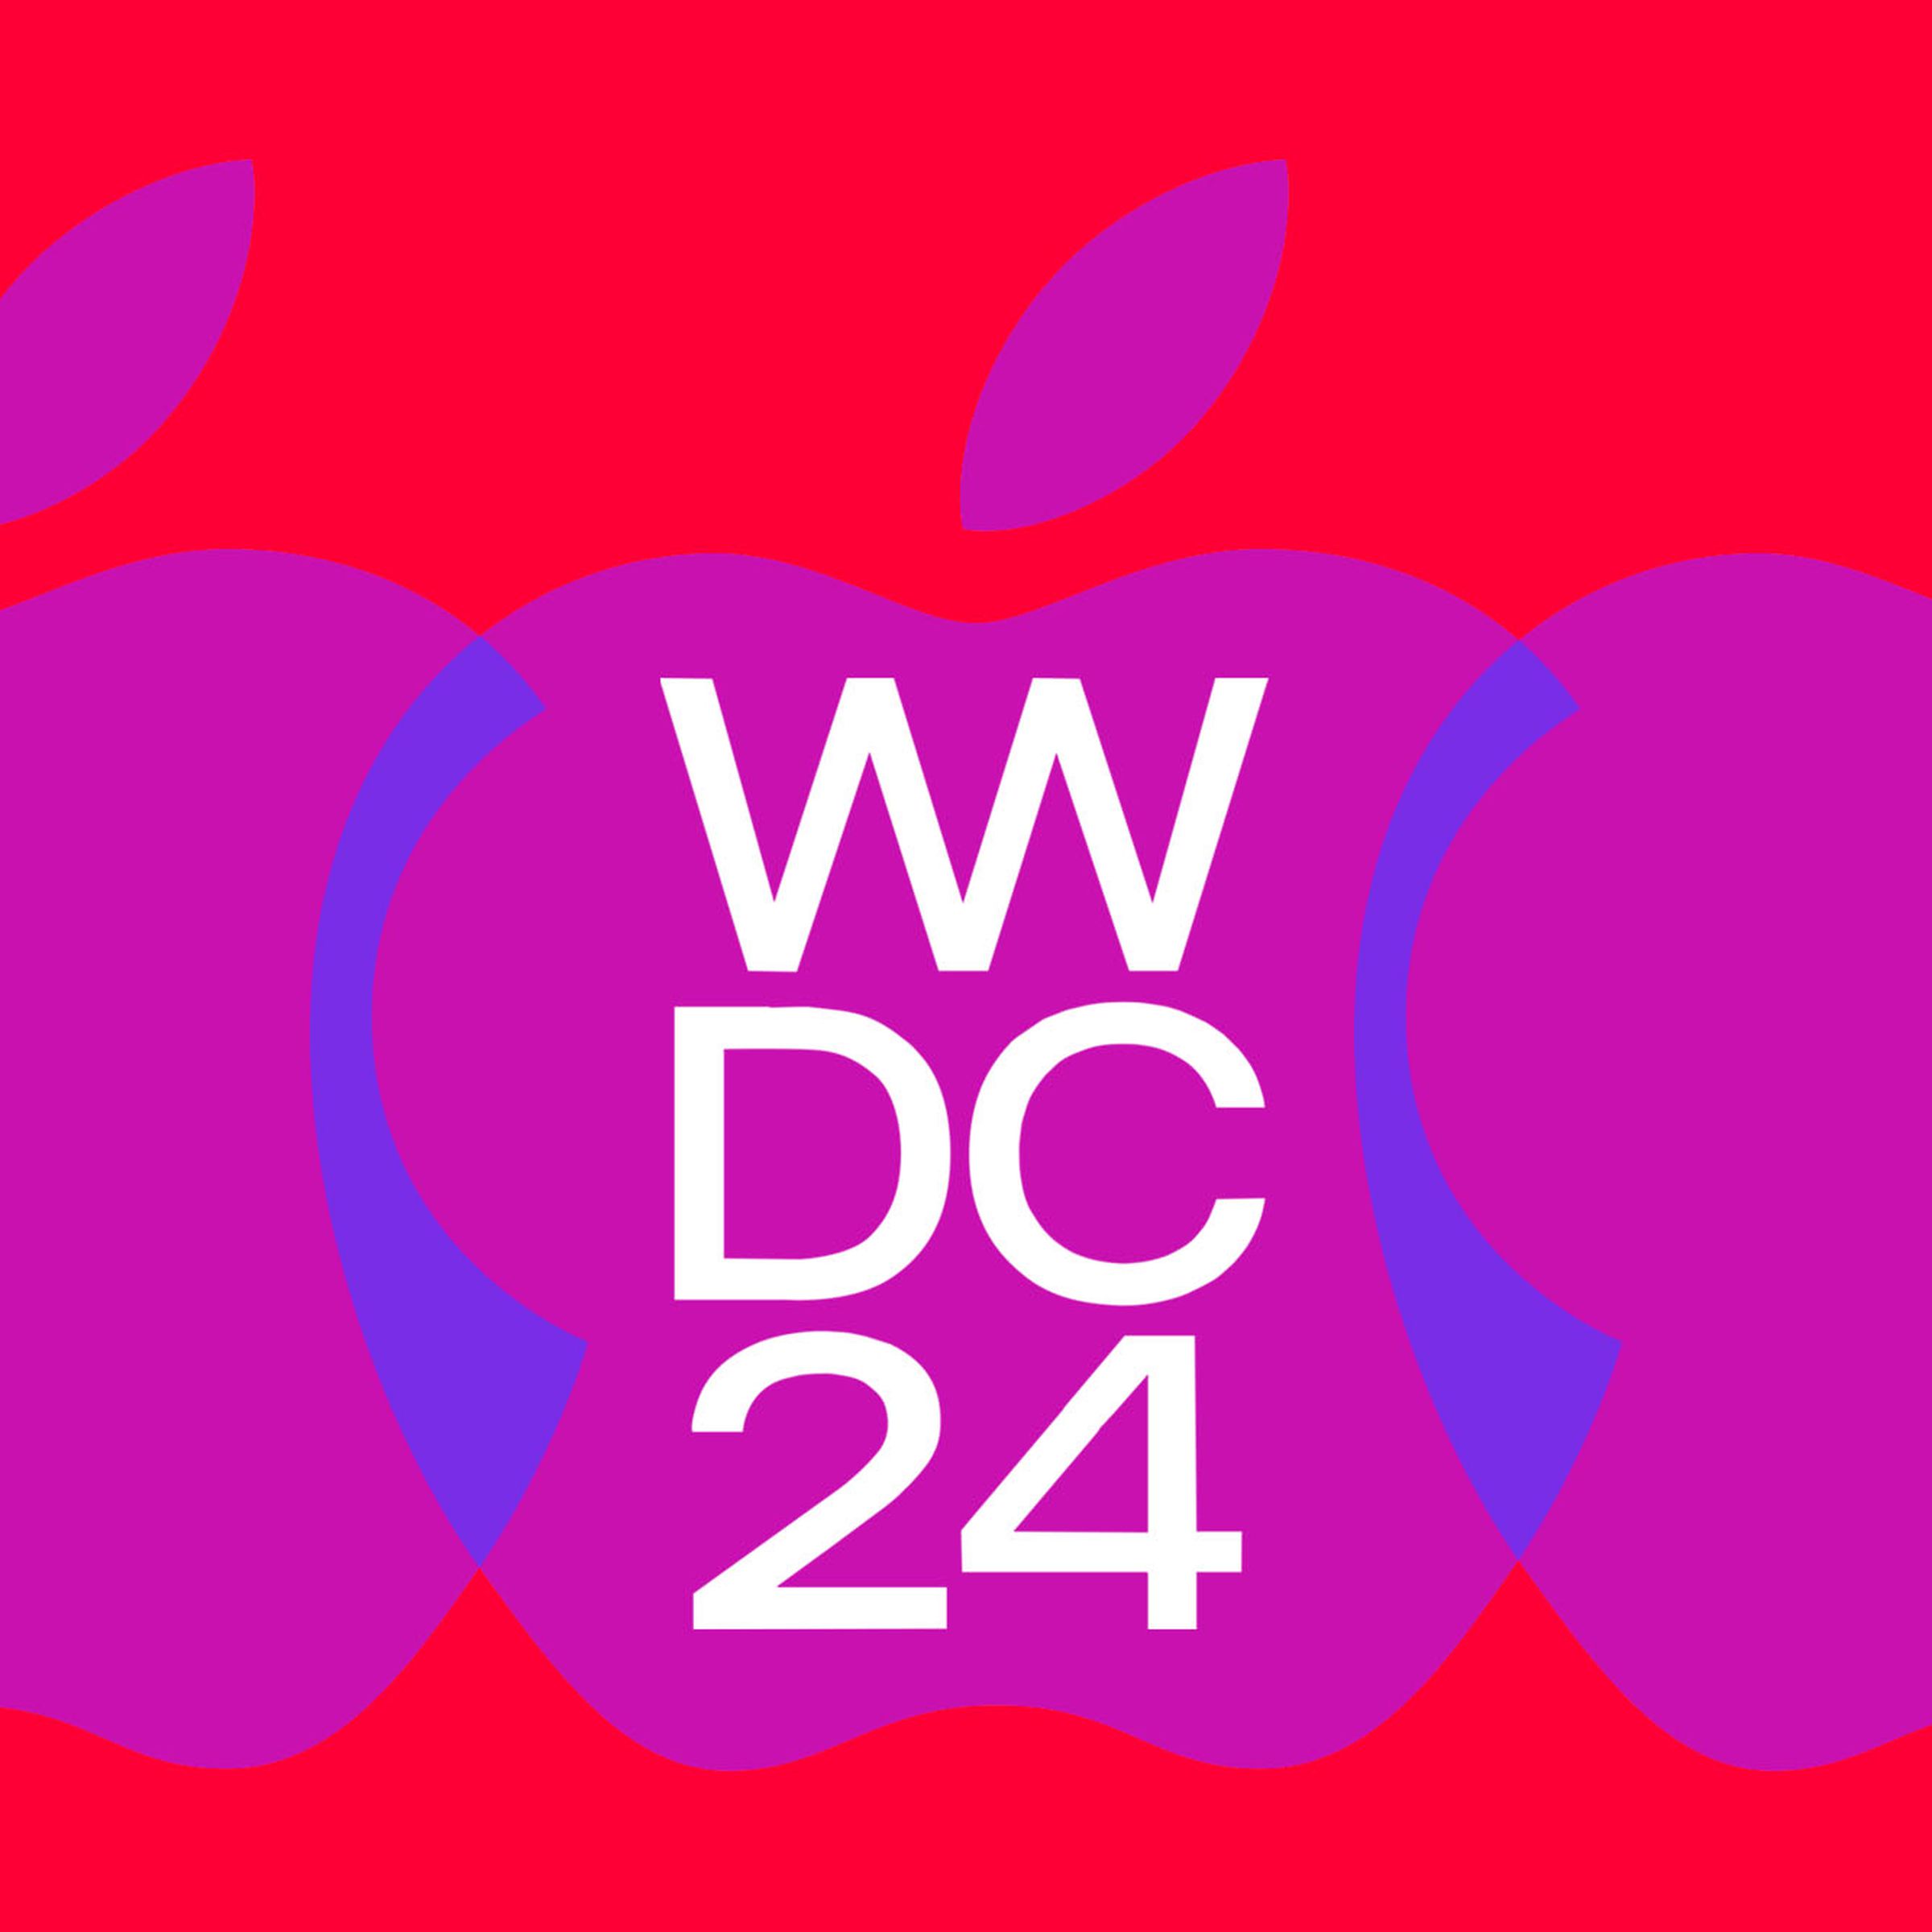 Illustration of the WWDC 2024 logo.